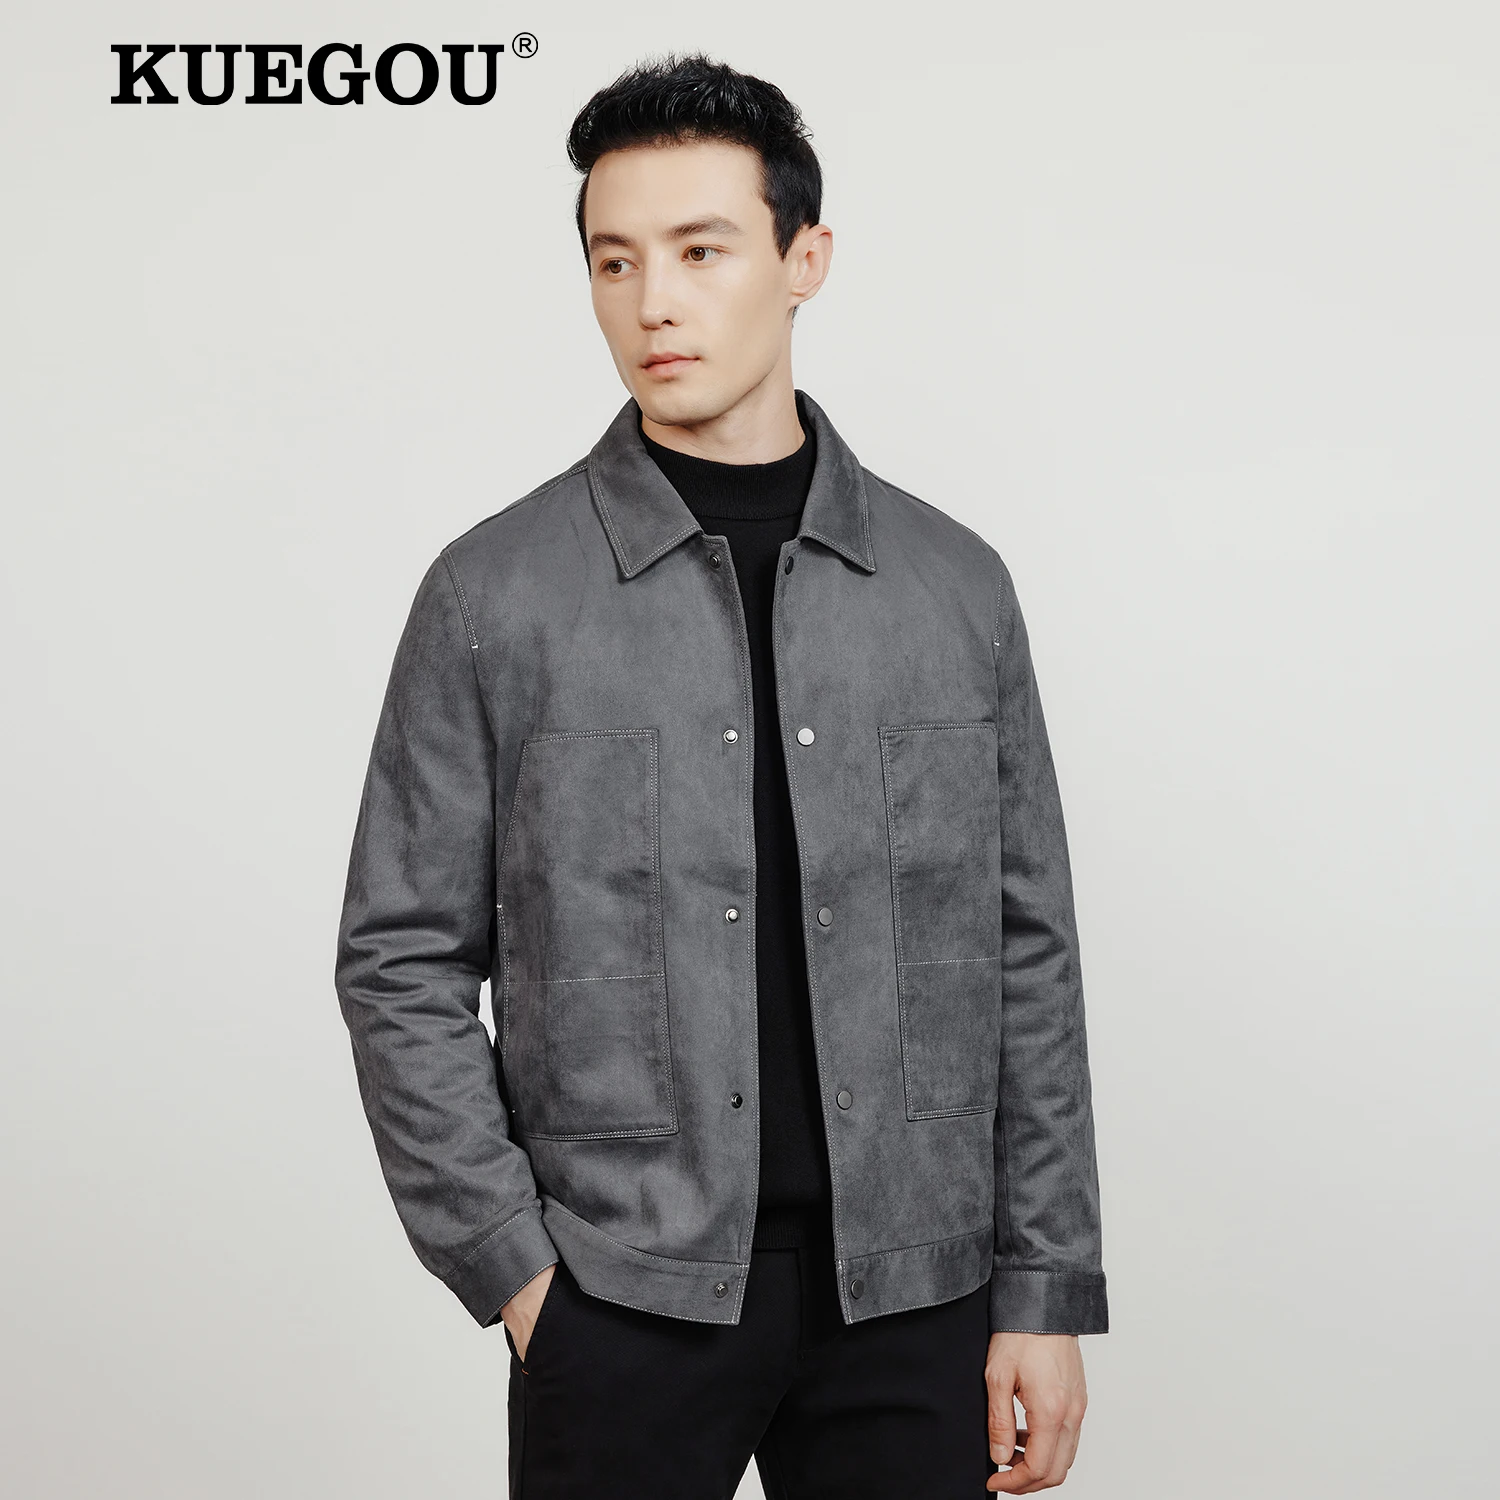 

KUEGOU 2022 Autumn New Men's Cargo Jacket Suede Fabric Solid Color Caeual Vintage Jackets Slim Coat Quality Plus Size 1059